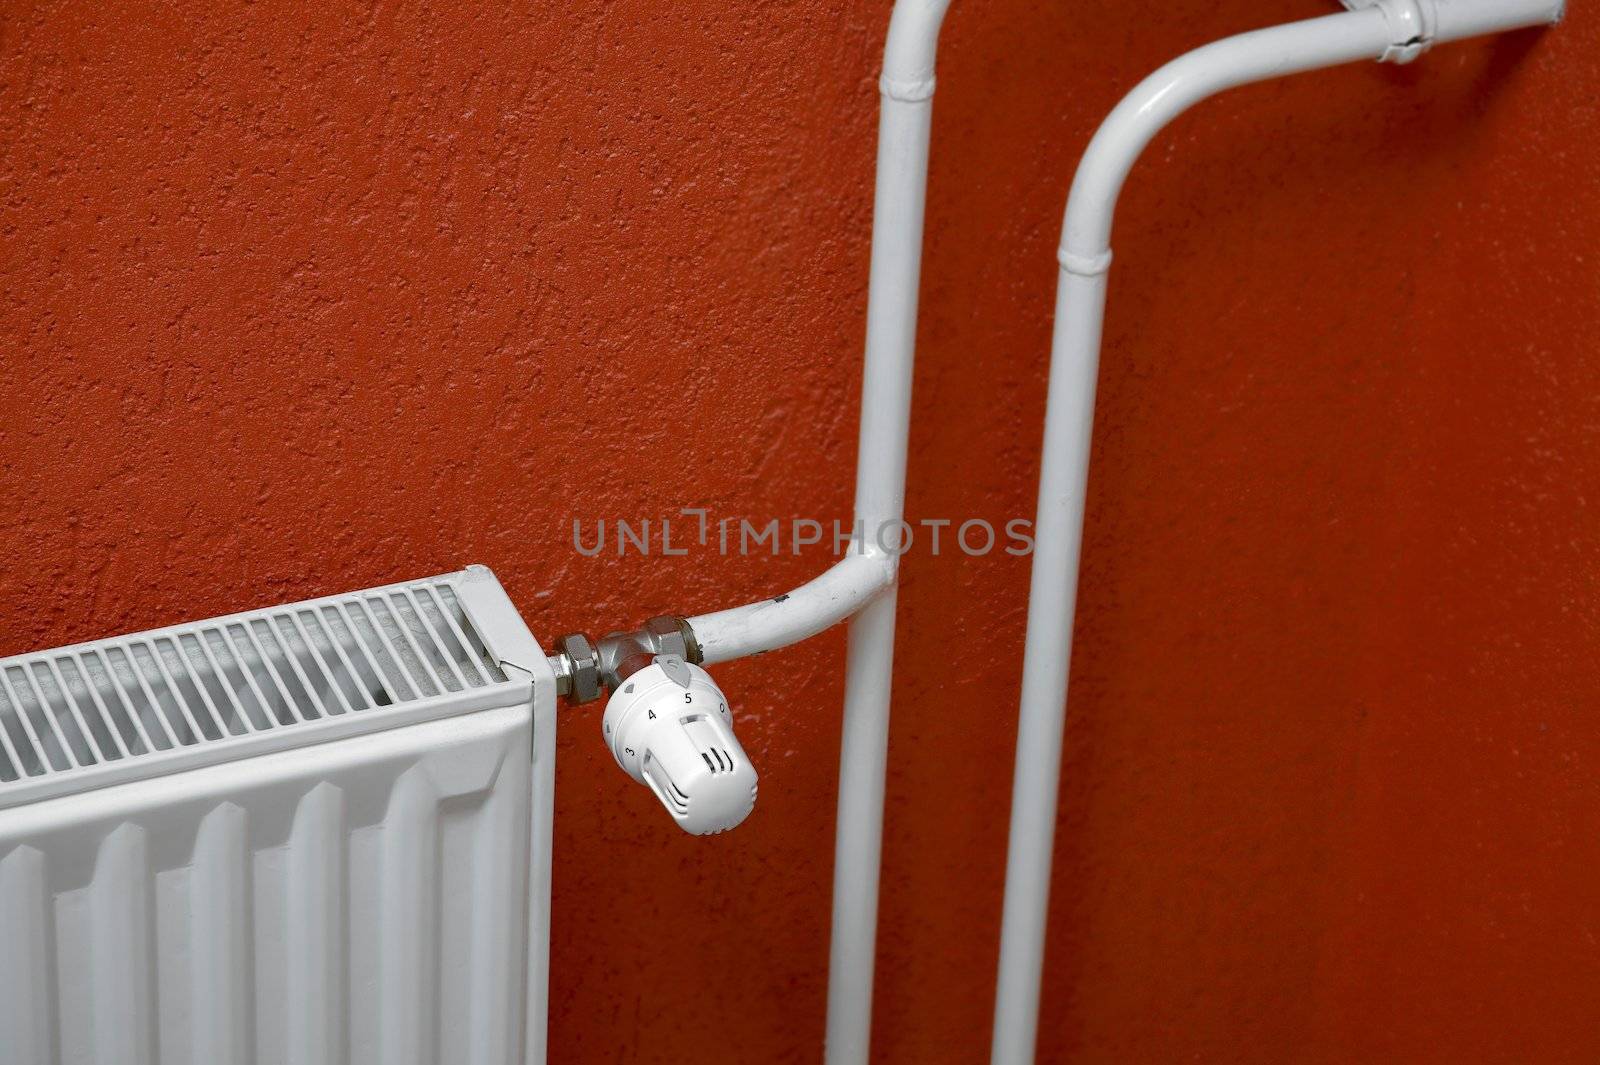 Heating radiator detail against orange wall